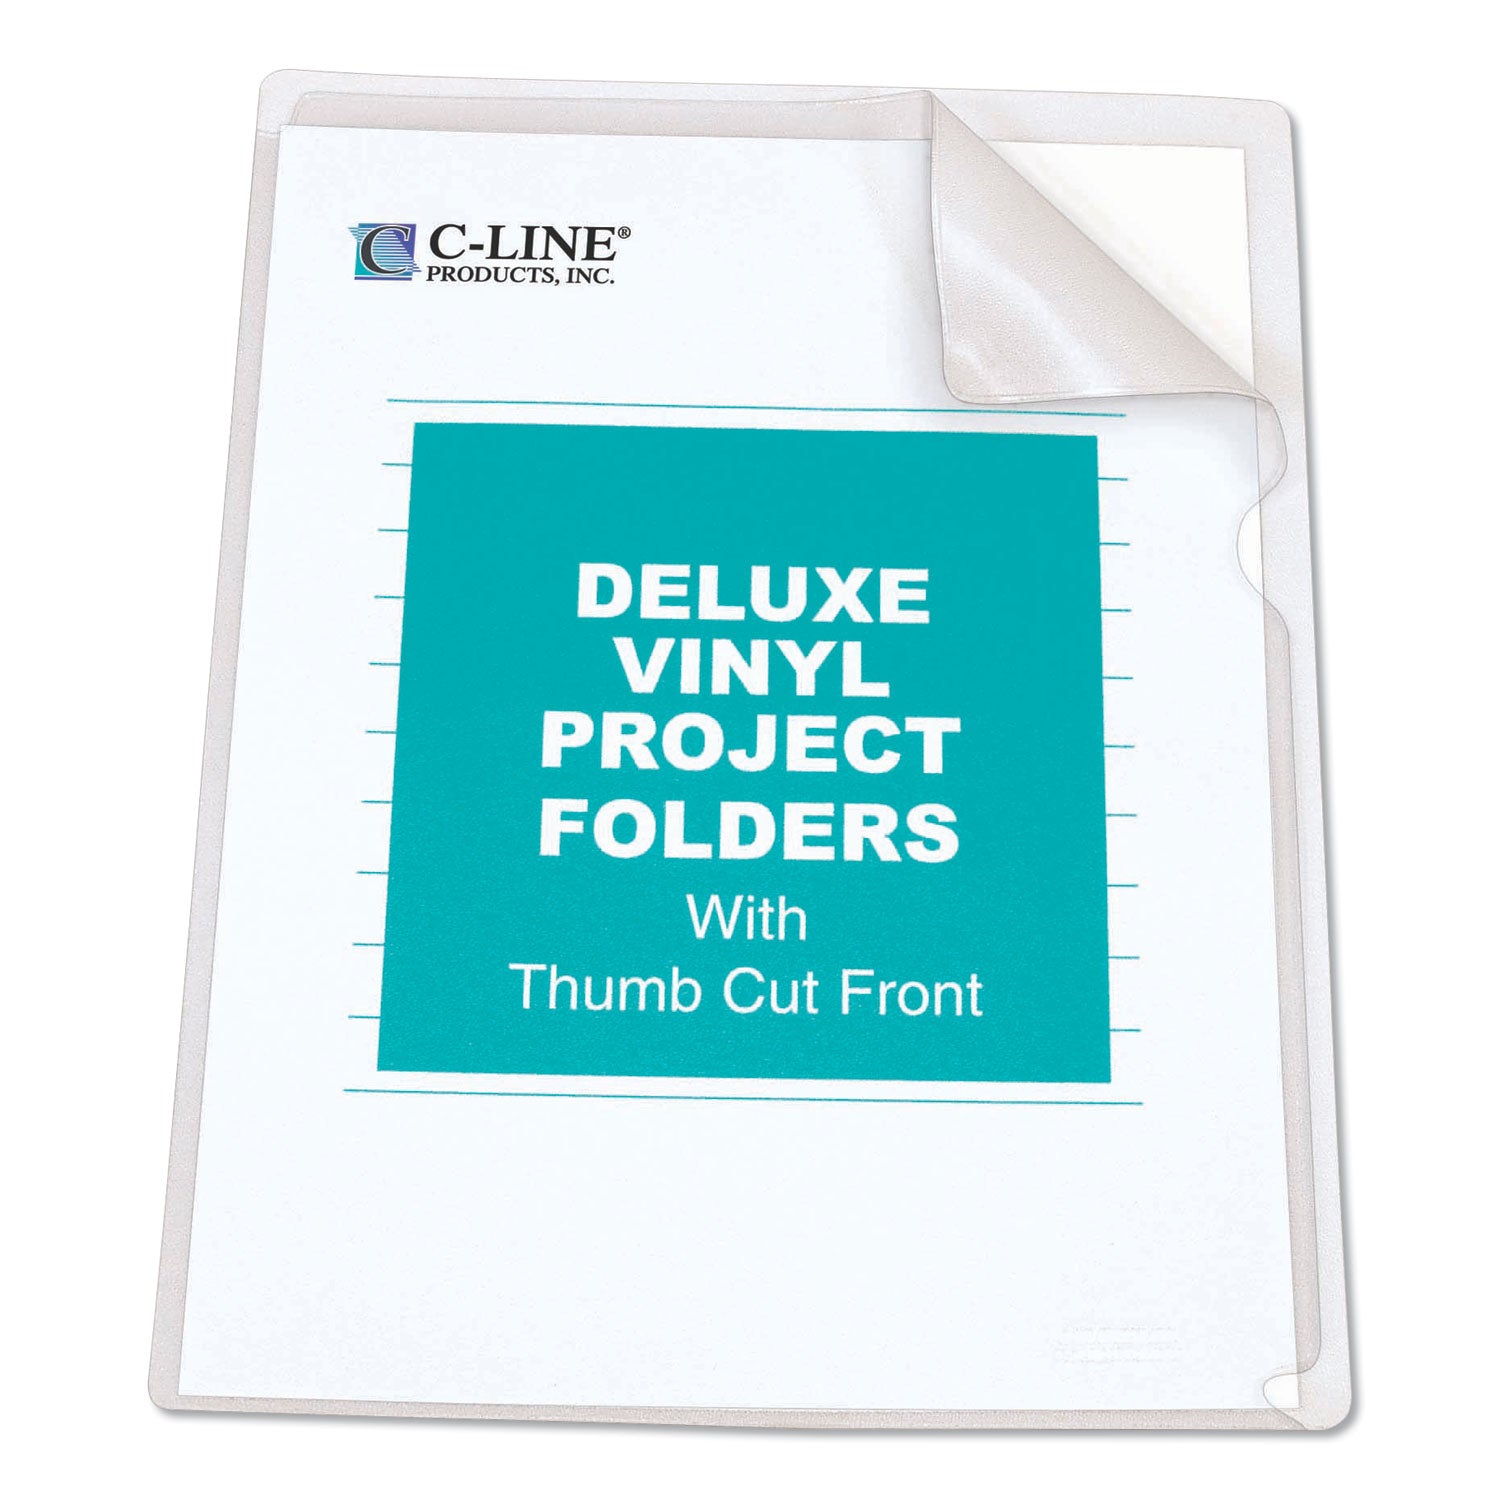 Deluxe Vinyl Project Folders, Letter Size, Clear, 50/Box - 